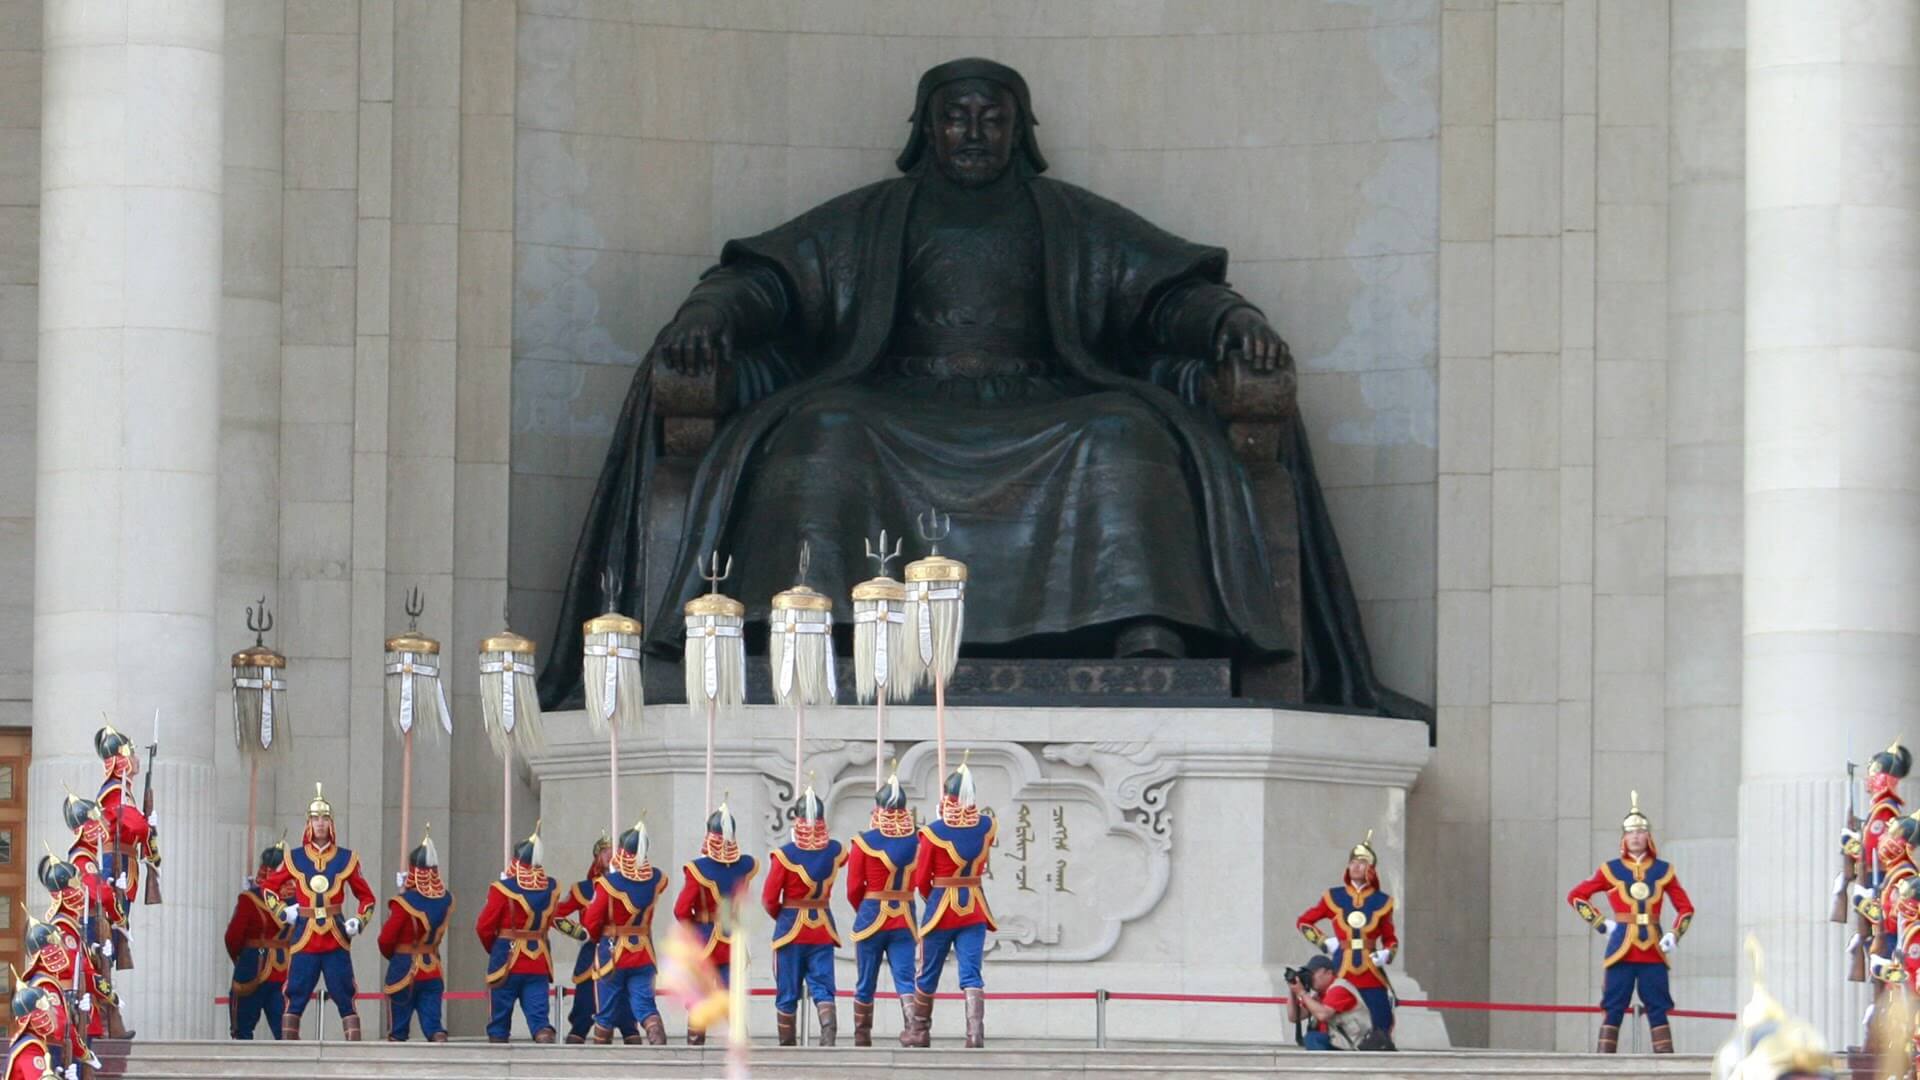 Genhgis Khan statue in central of Ulaanbaatar